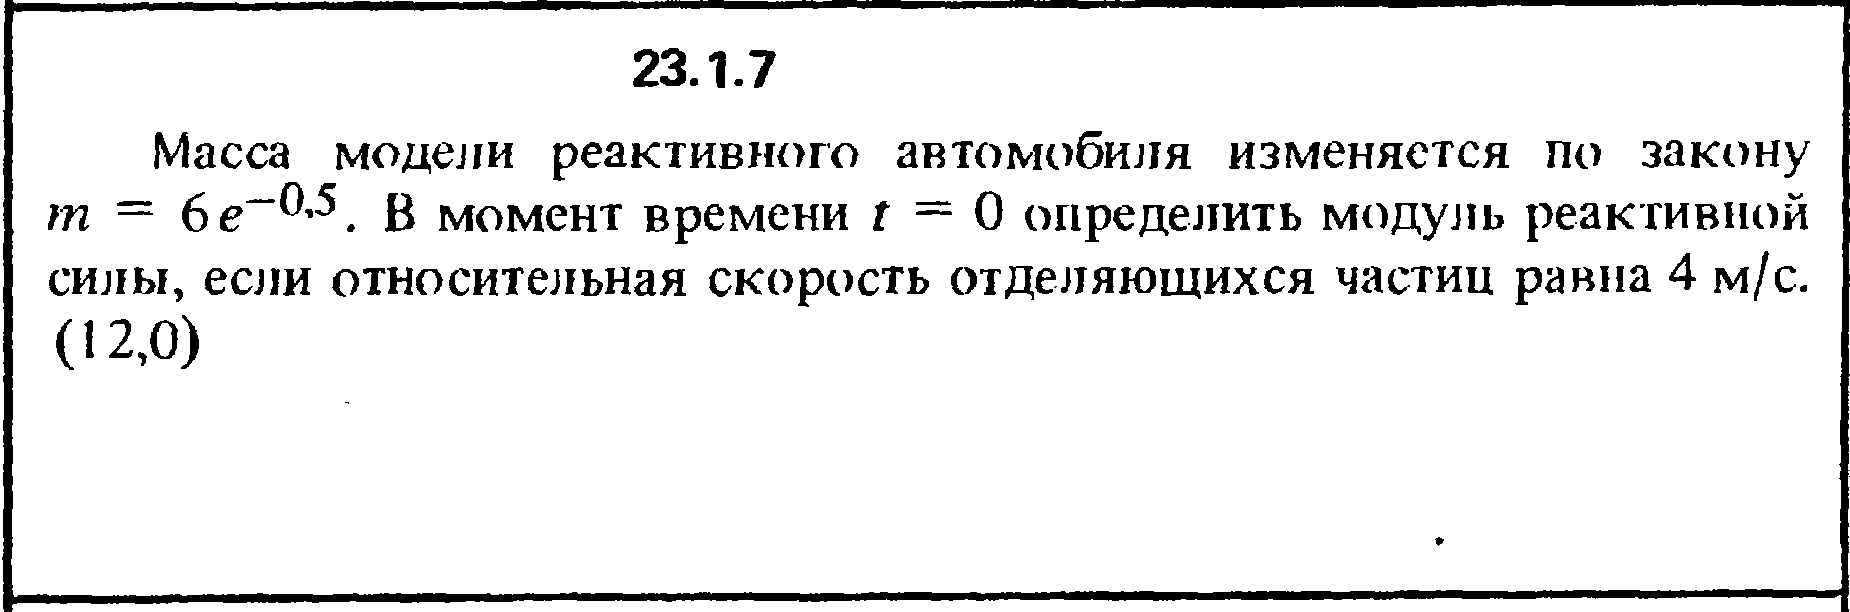 Решение 23.1.7 из сборника (решебника) Кепе О.Е. 1989